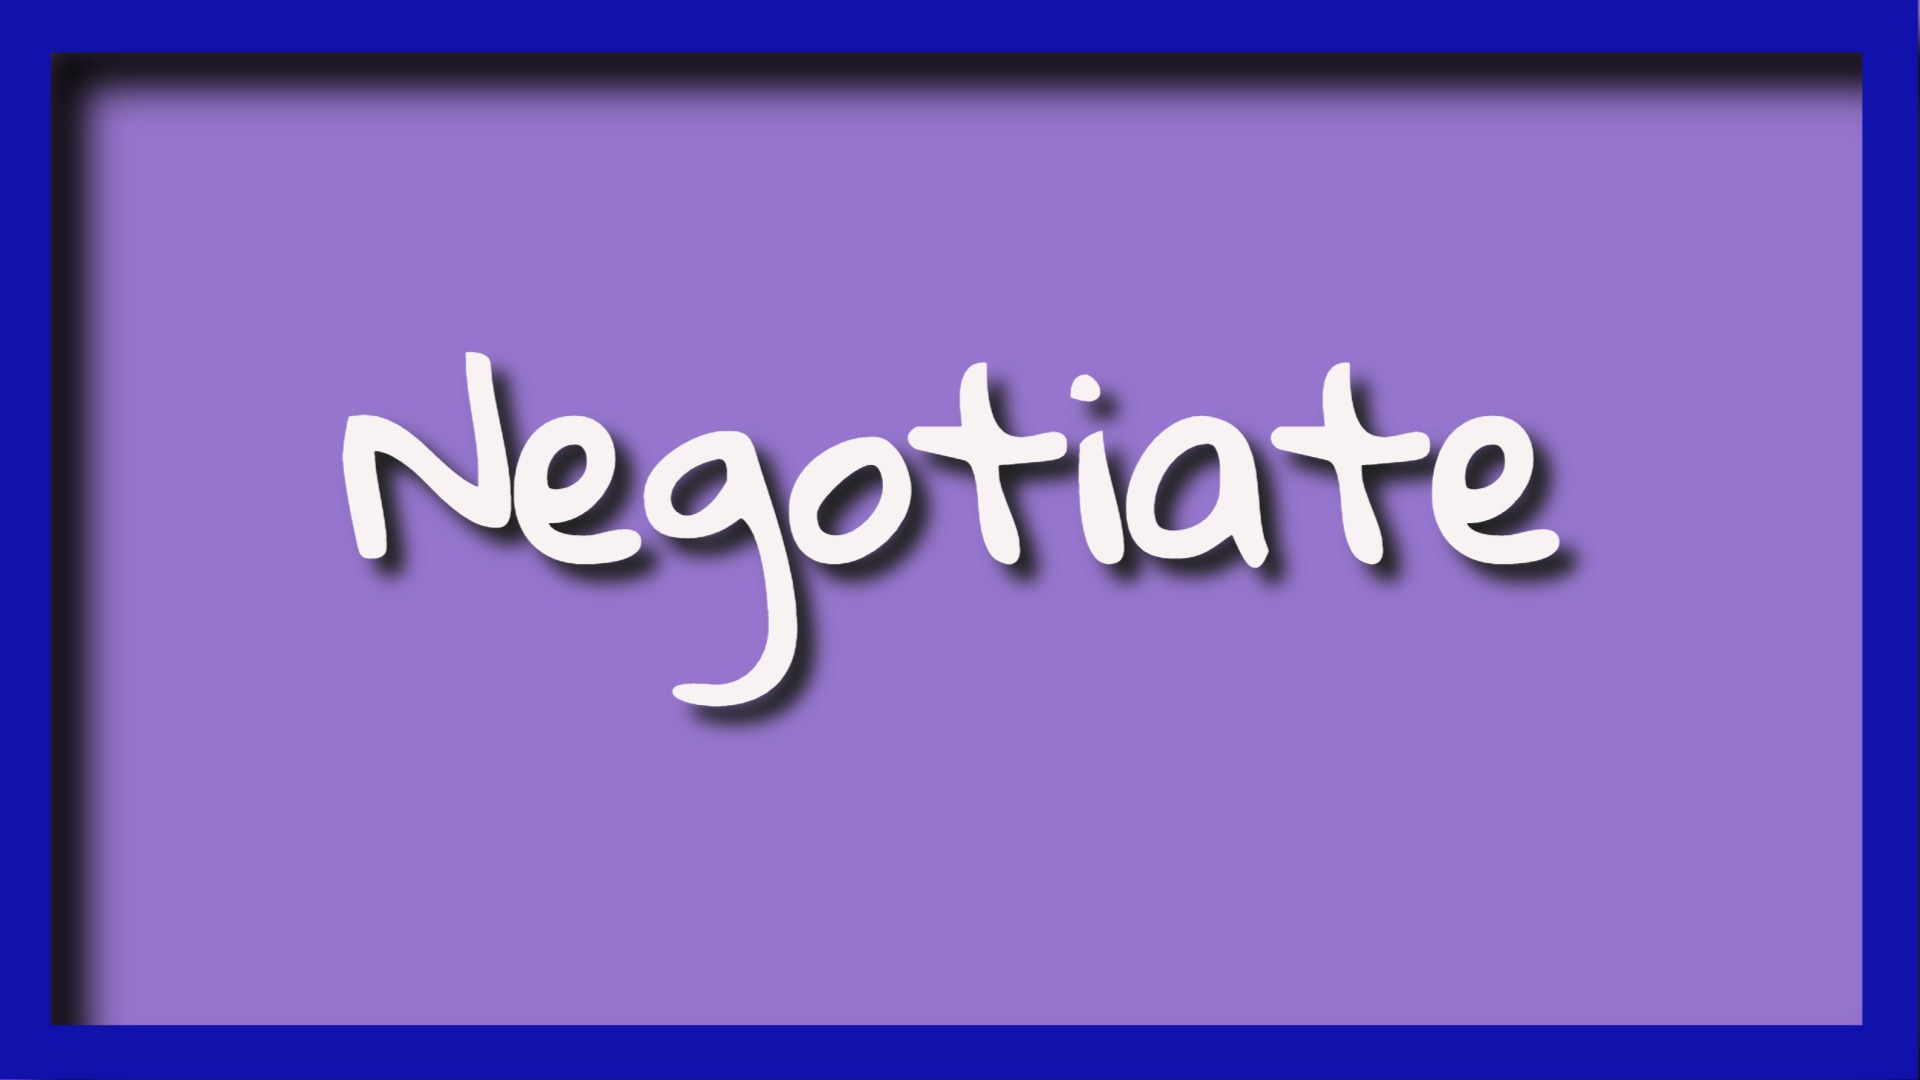 the word negotiate in a purple box